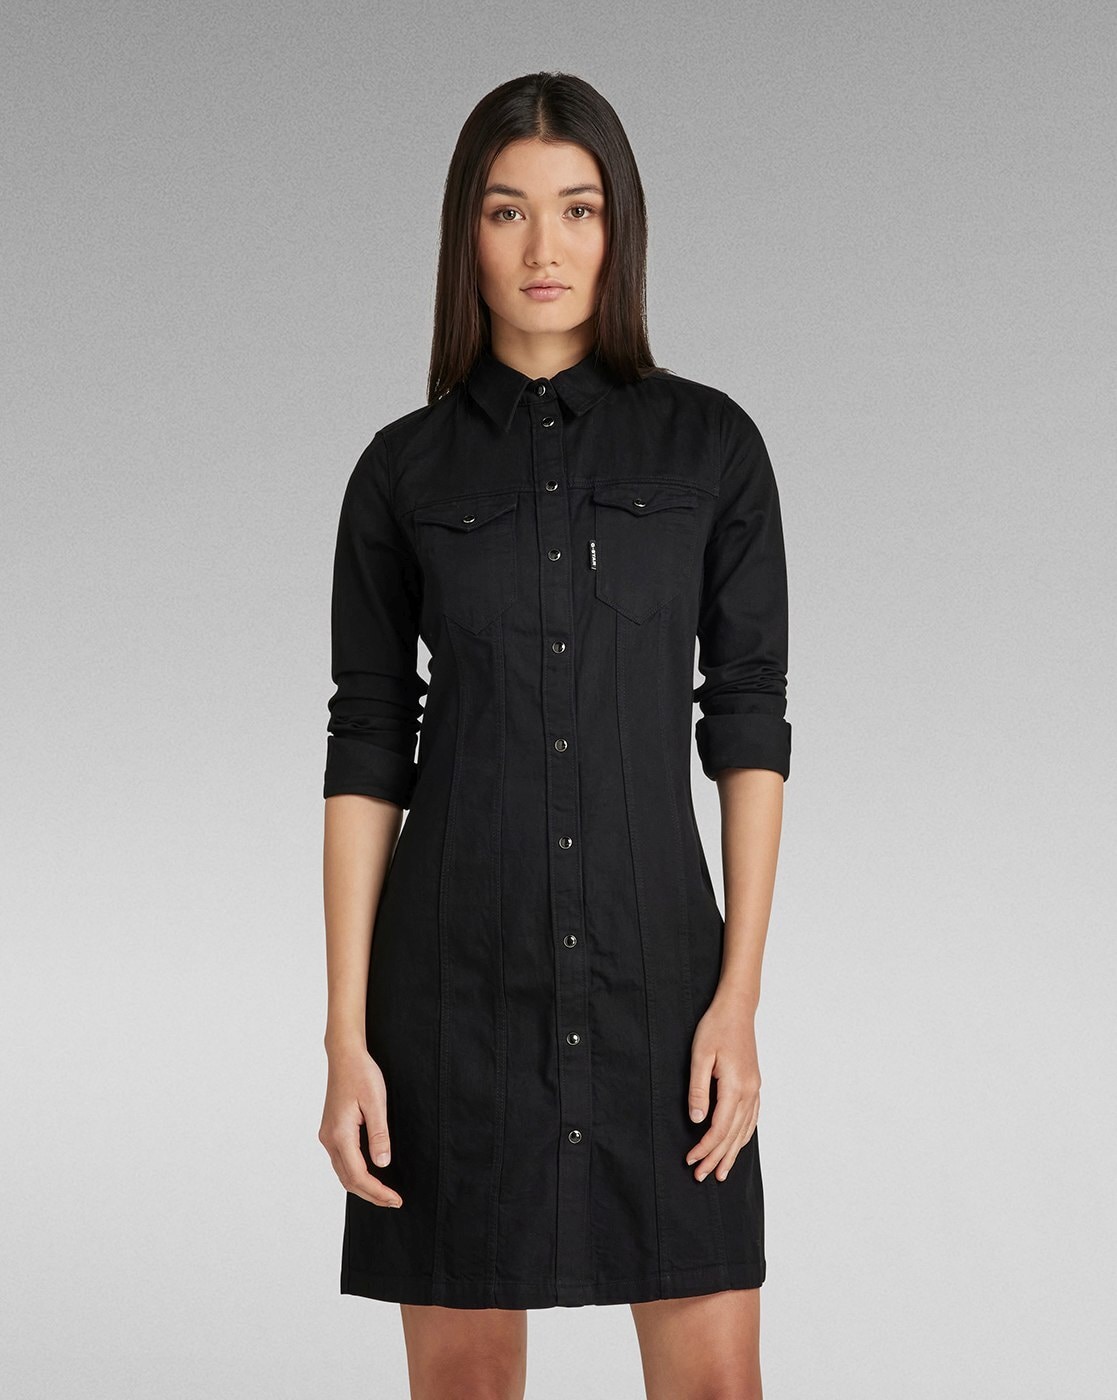 Cotton denim shirt dress - Black - Ladies | H&M IN